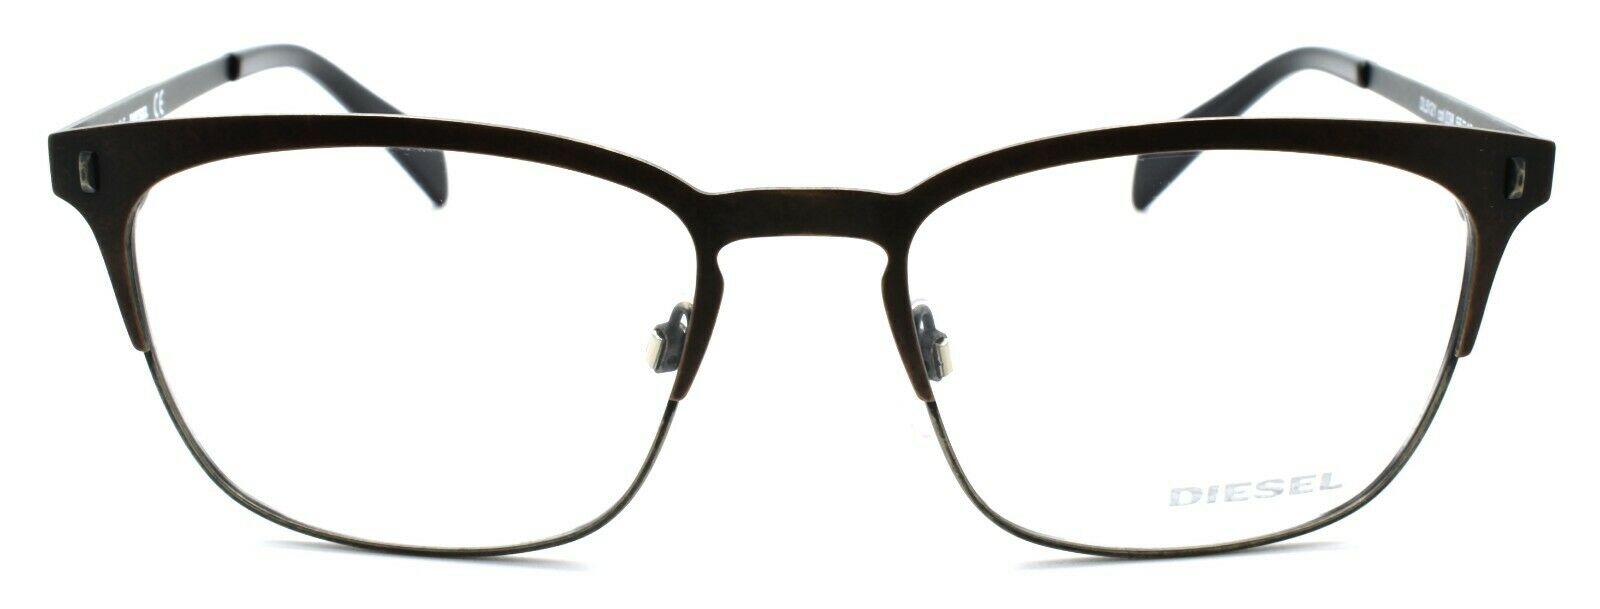 2-Diesel DL5121 038 Eyeglasses Frames Unisex 55-18-145 Vintage Bronze-664689666676-IKSpecs